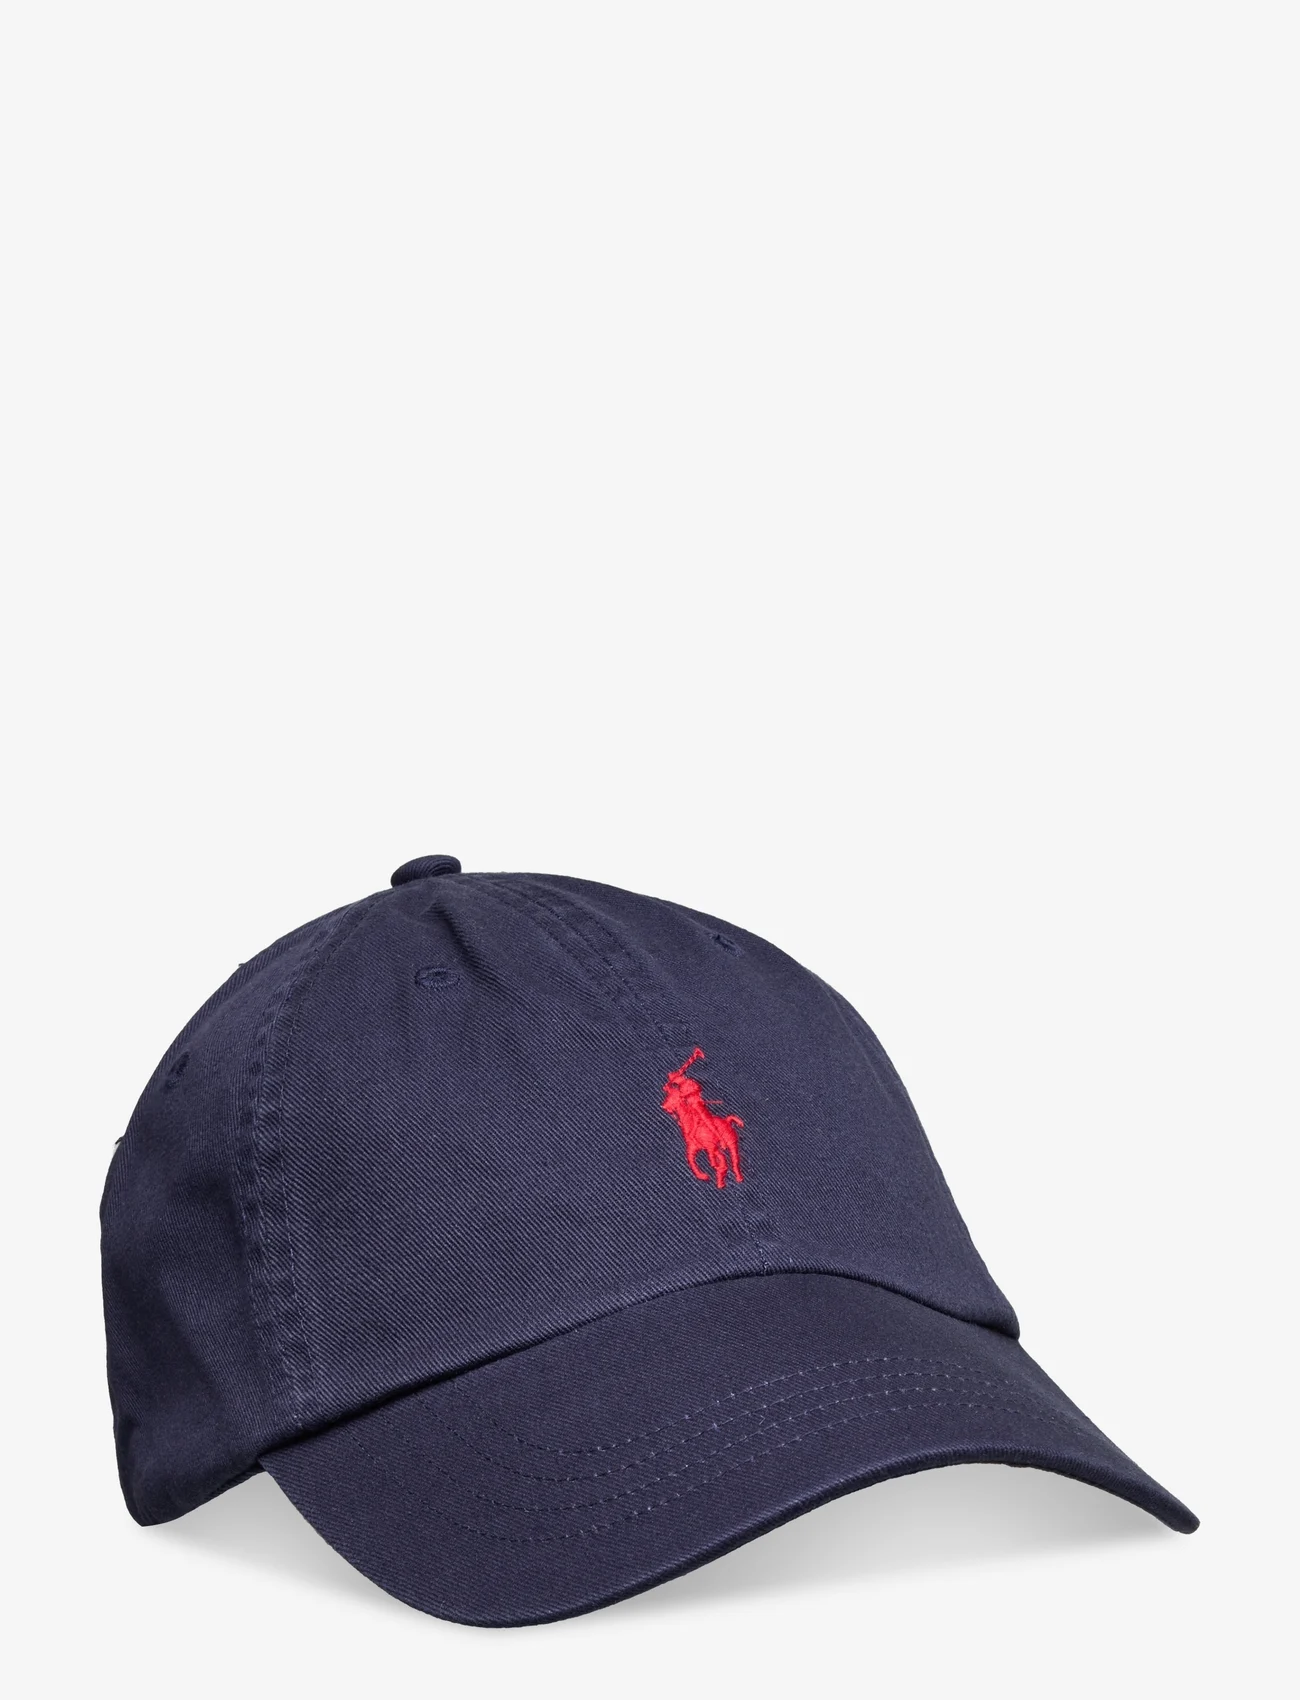 Polo Ralph Lauren Cotton Chino Baseball Cap - Caps 